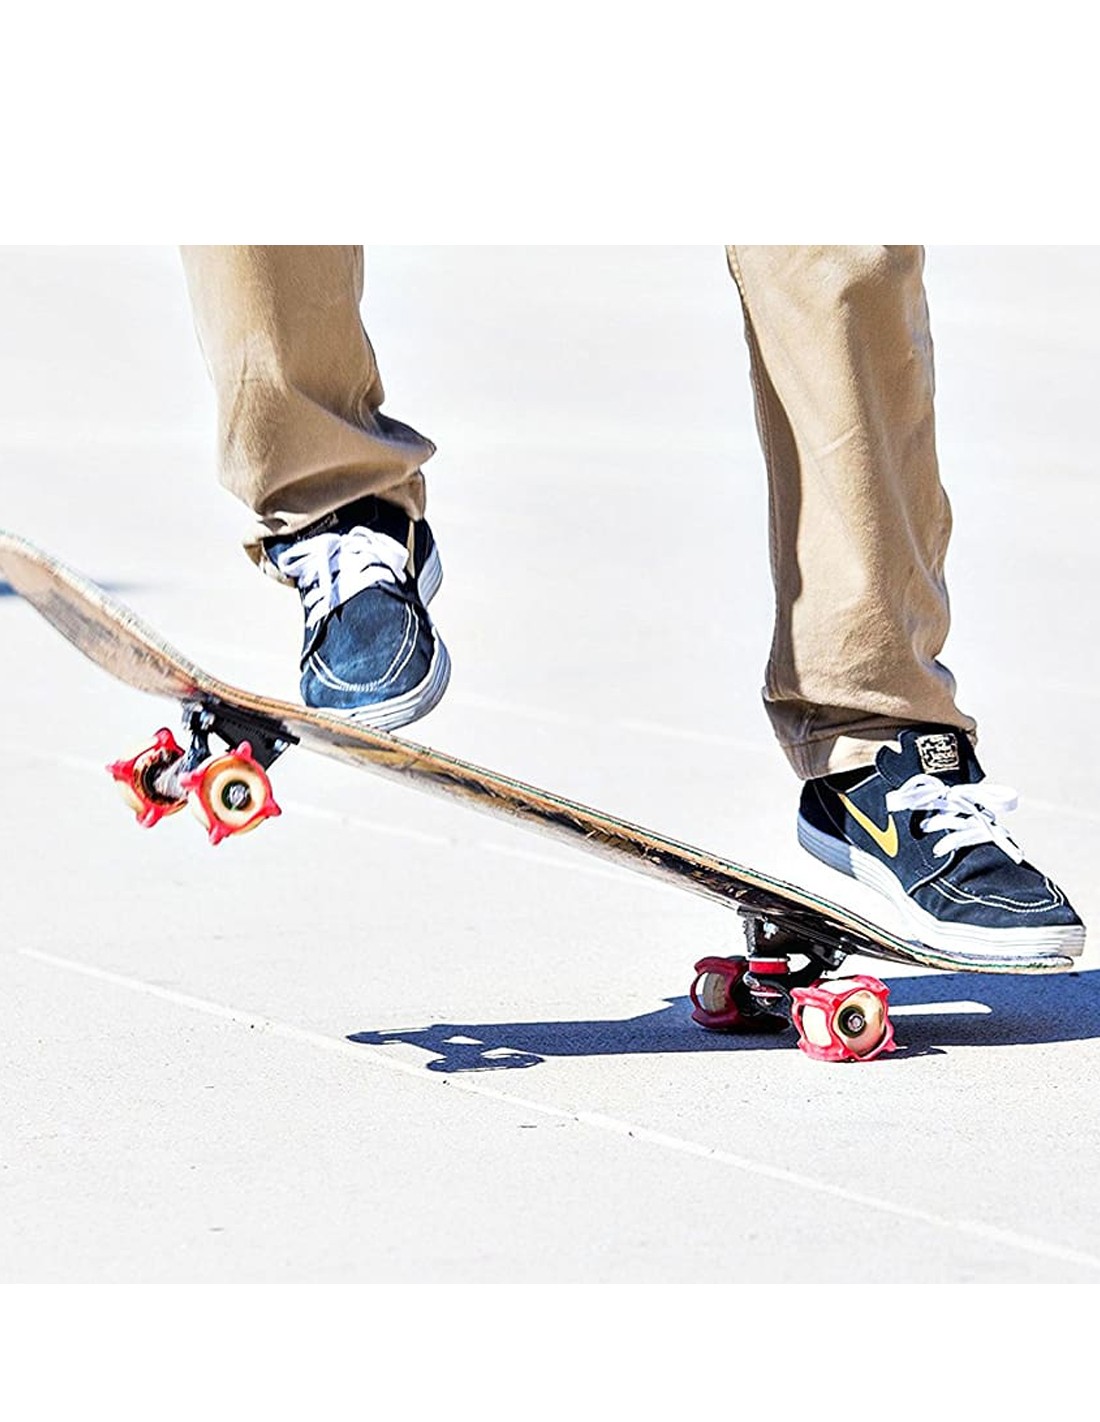 Protections skateboard glisse urbaine - Acheter sur California Street